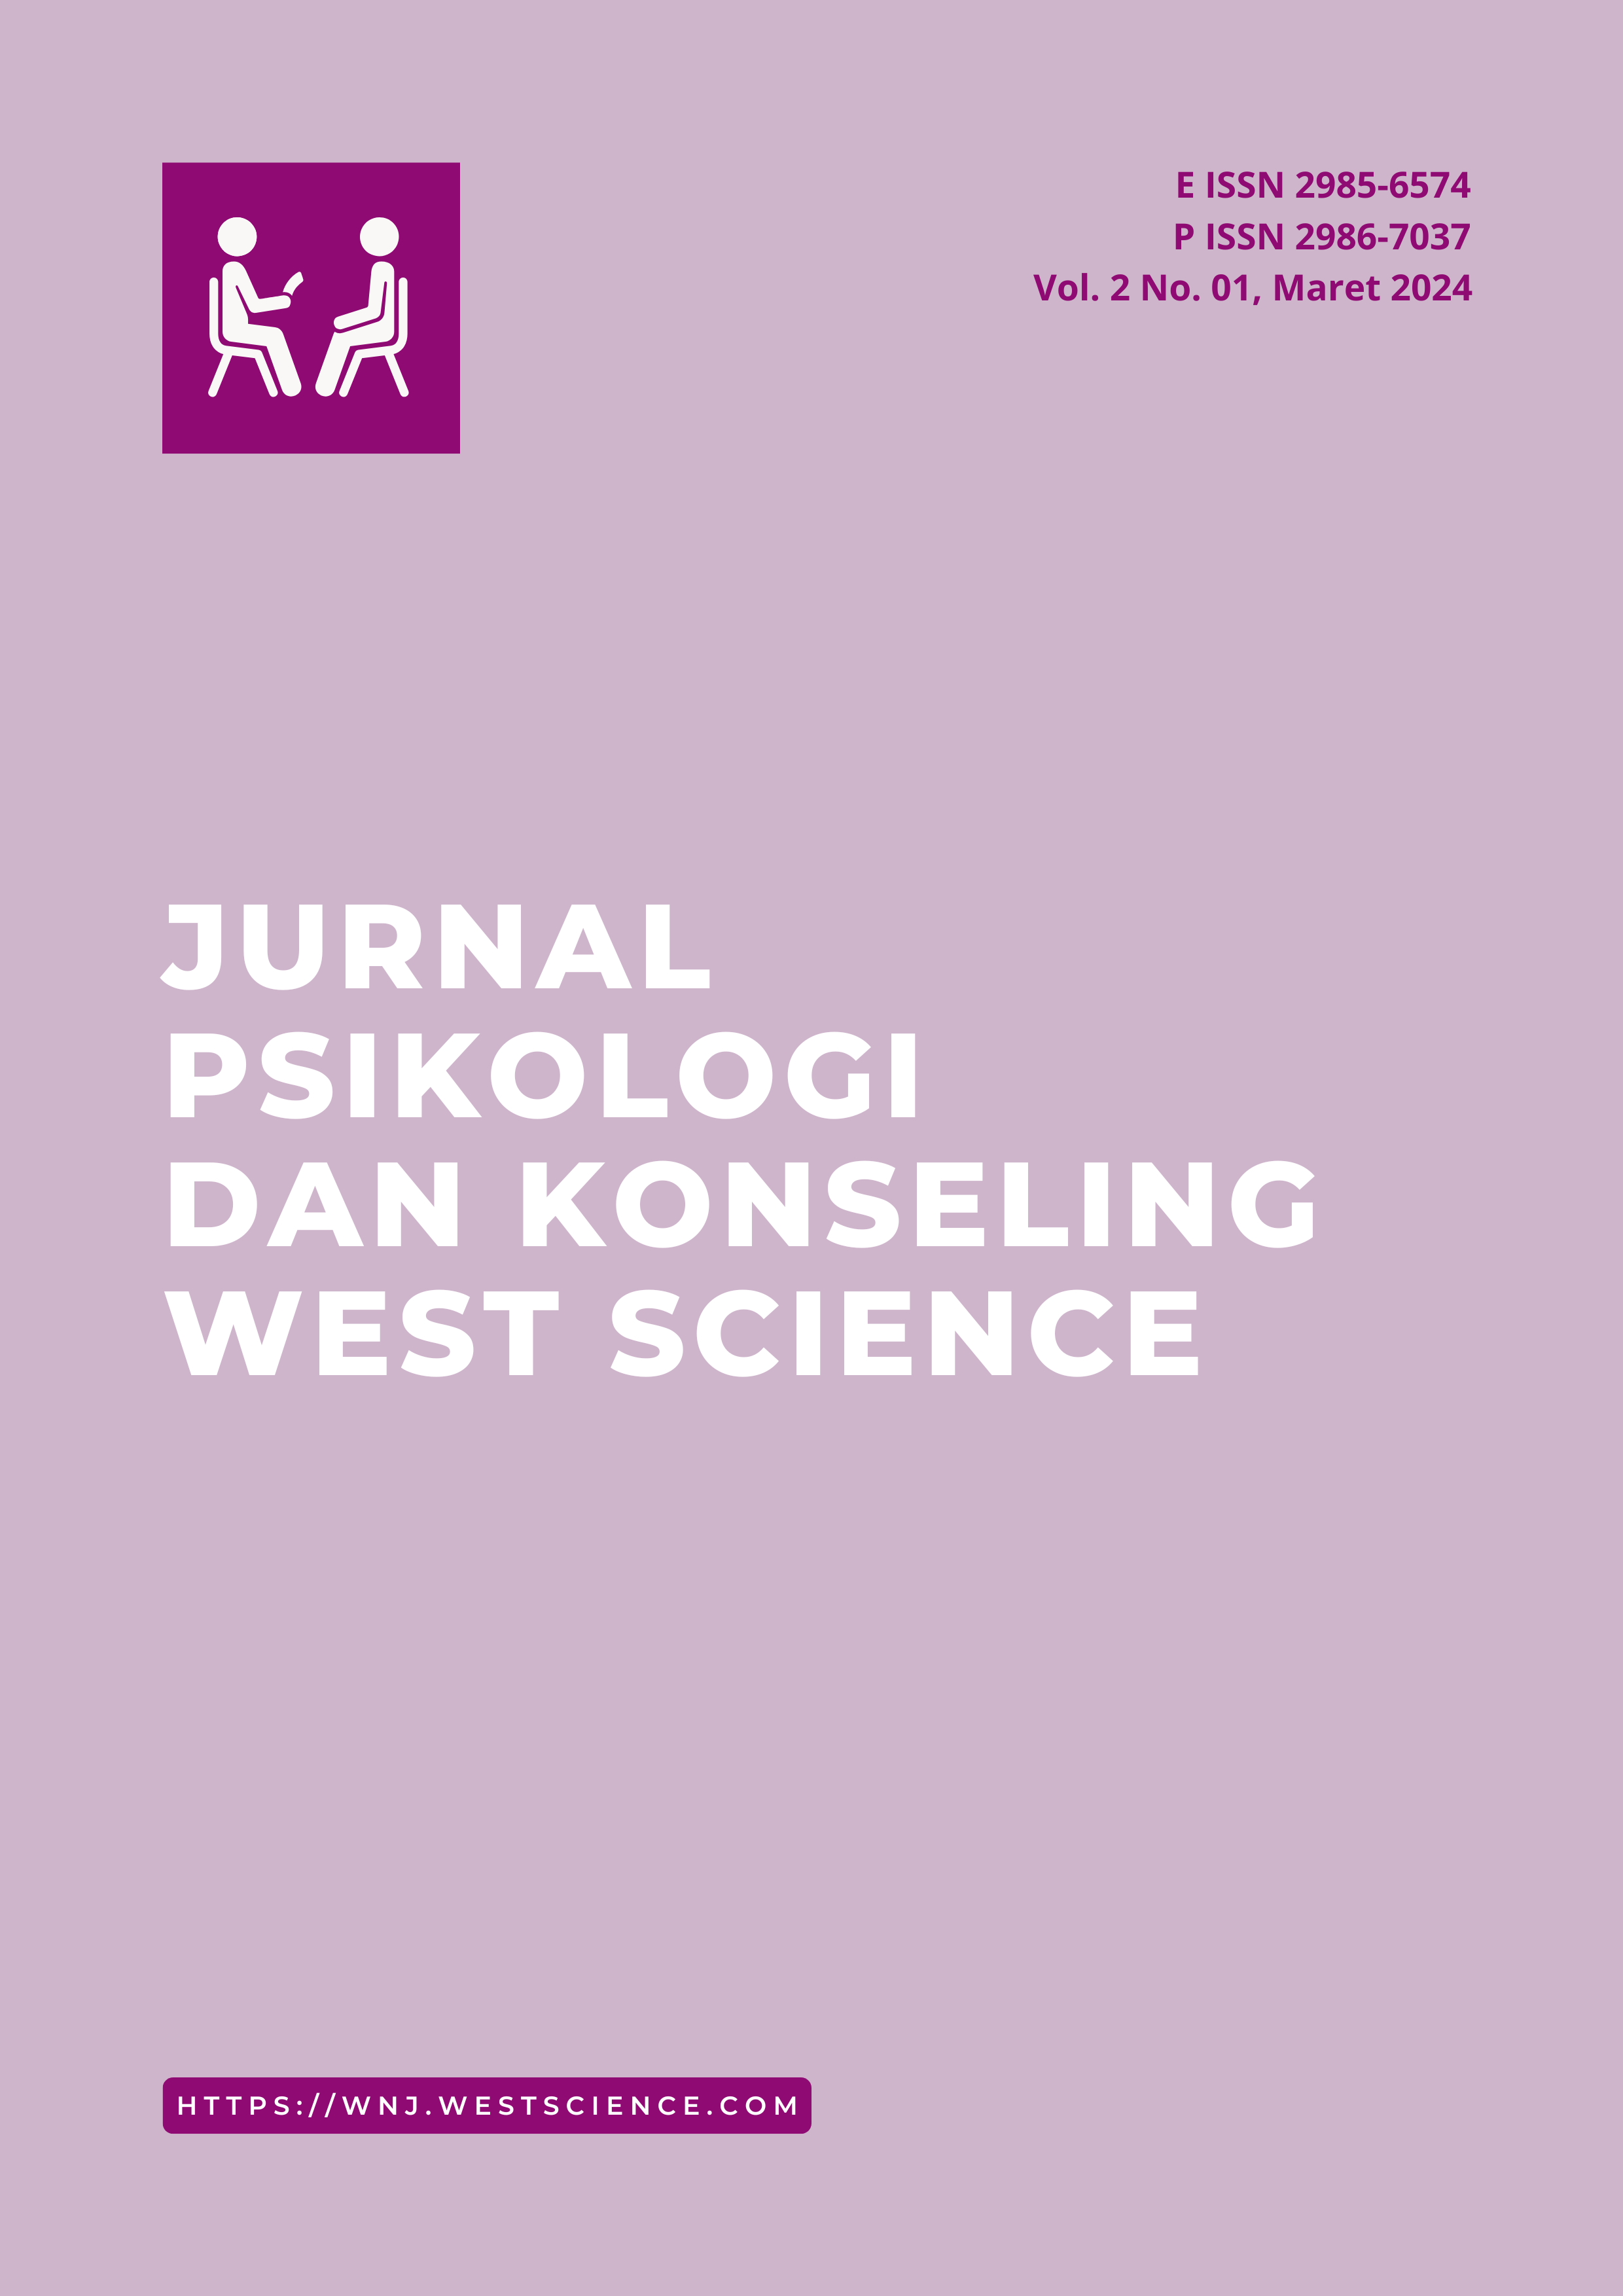 					Lihat Vol 2 No 01 (2024): Jurnal Psikologi dan Konseling West Science
				